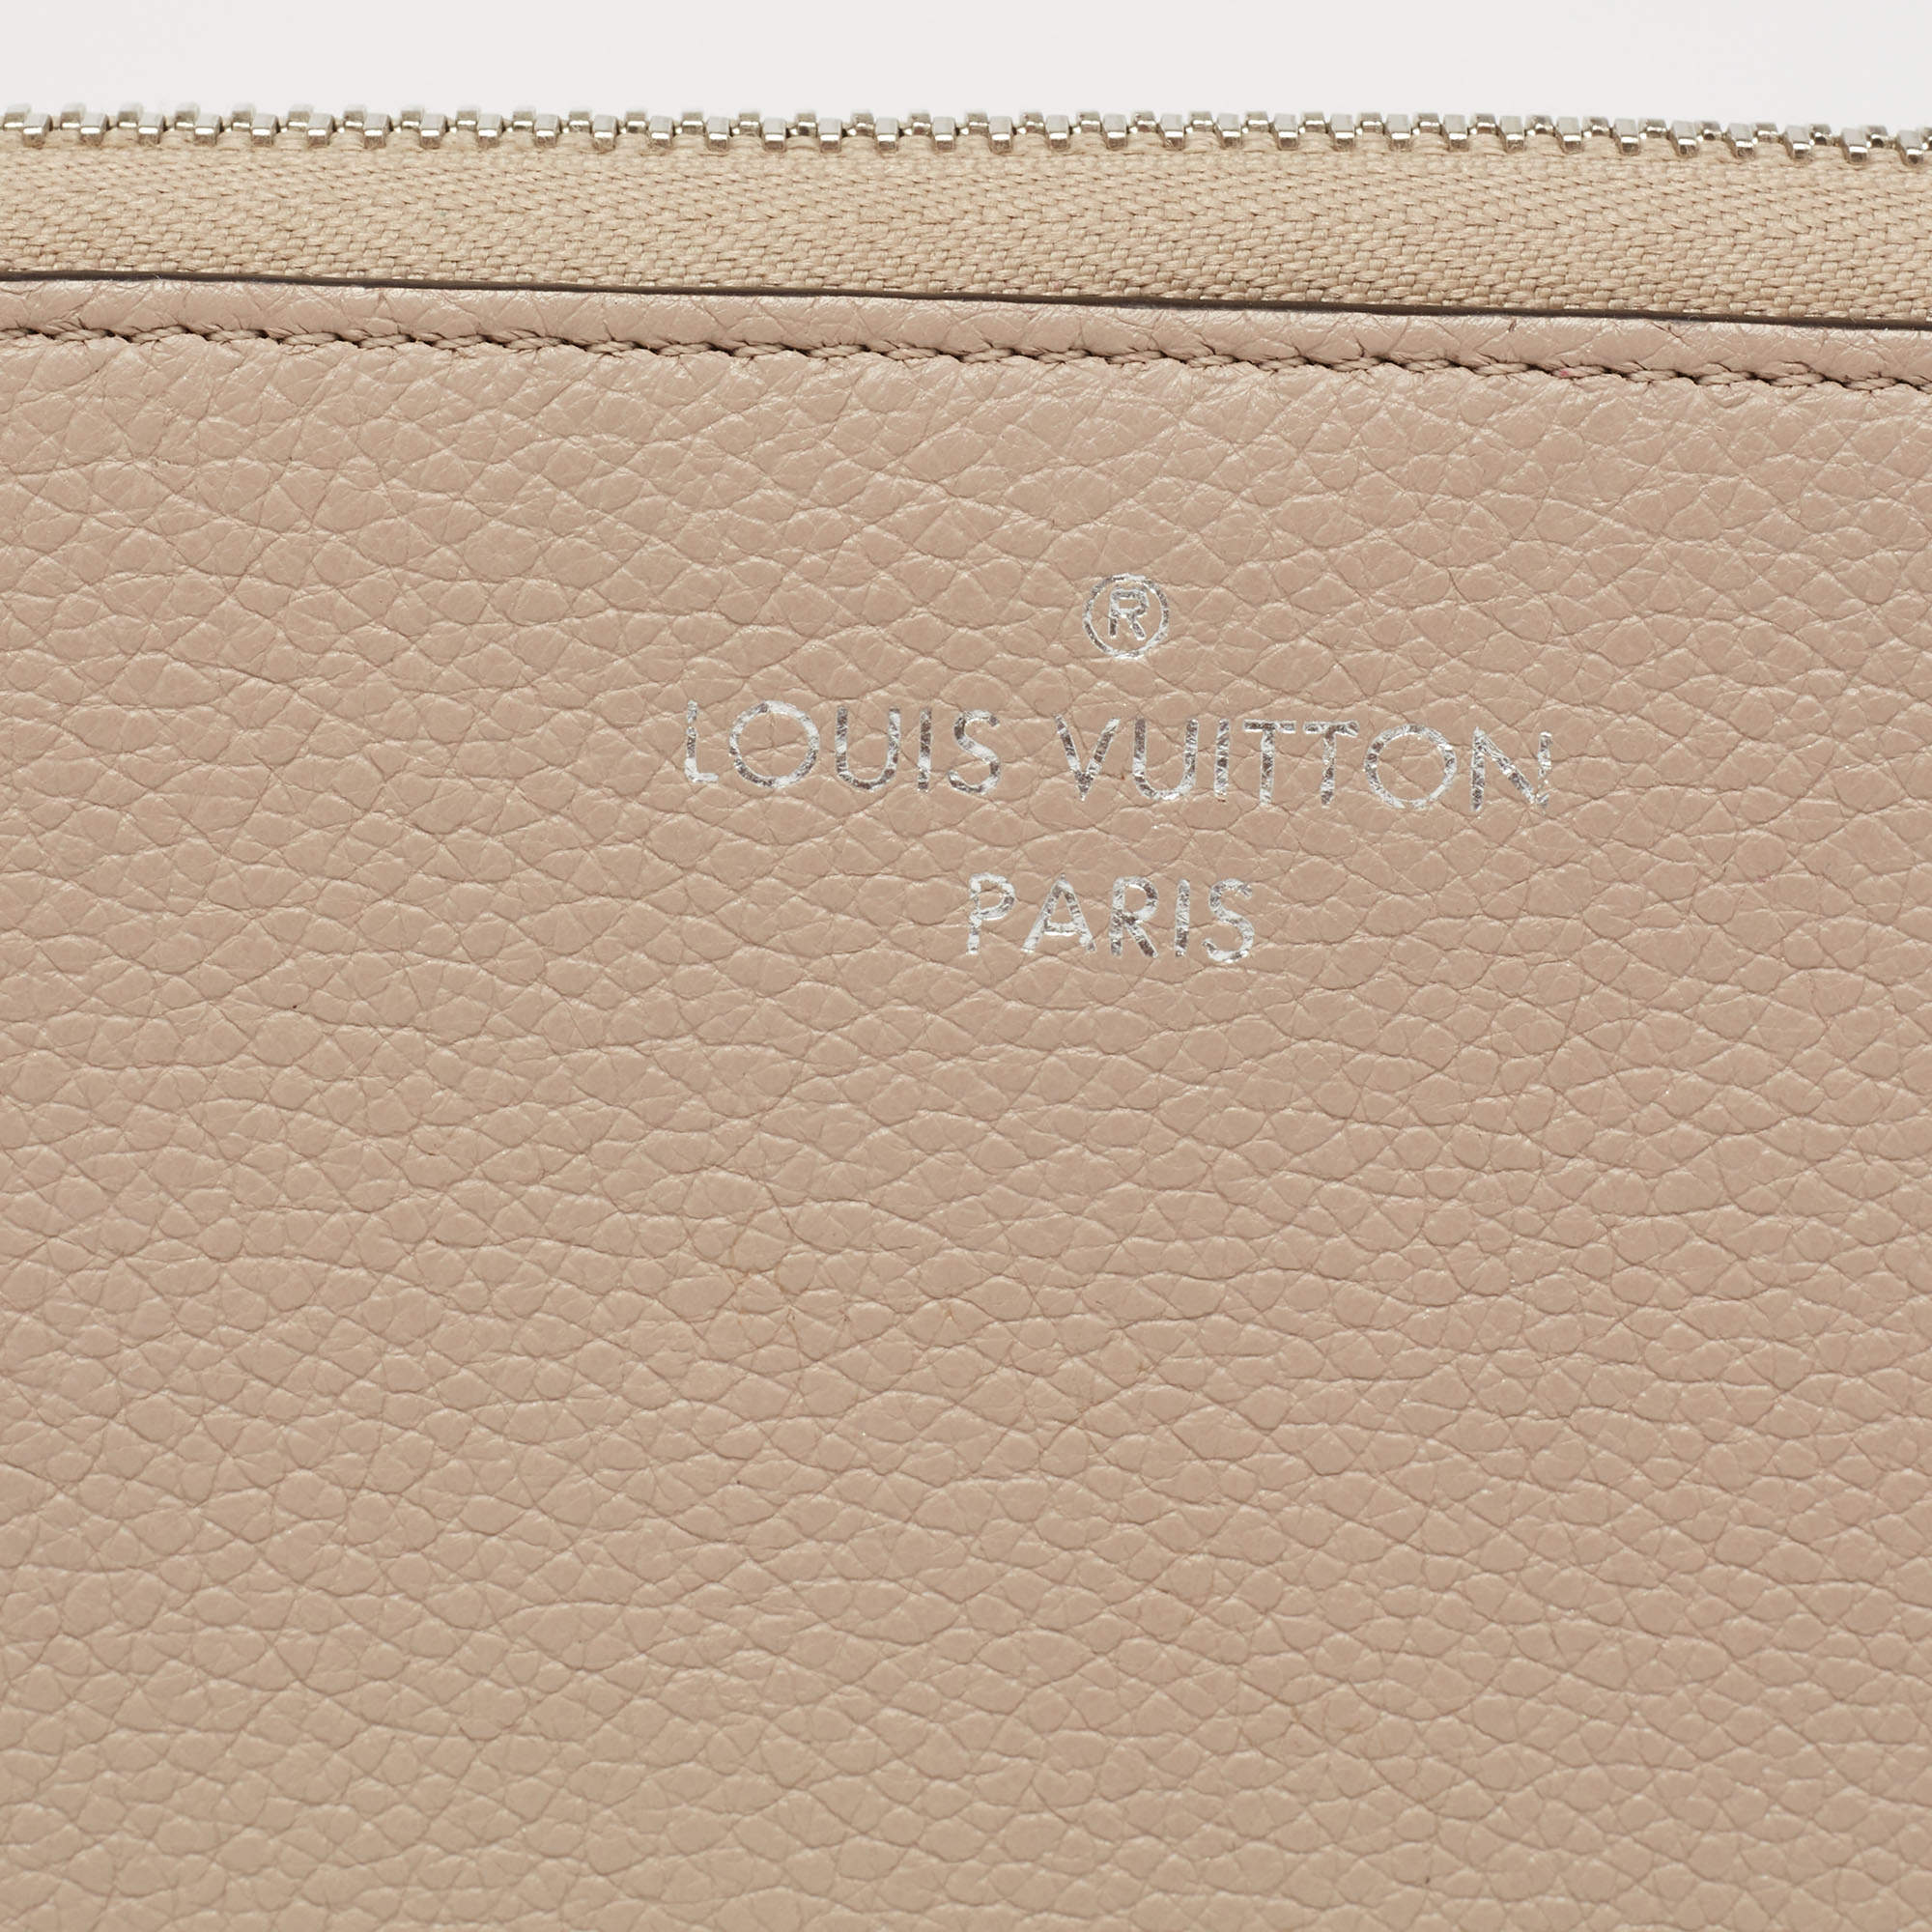 Louis Vuitton Grey Galet Veau Cachemire Leather Comete Wallet - MyDesignerly